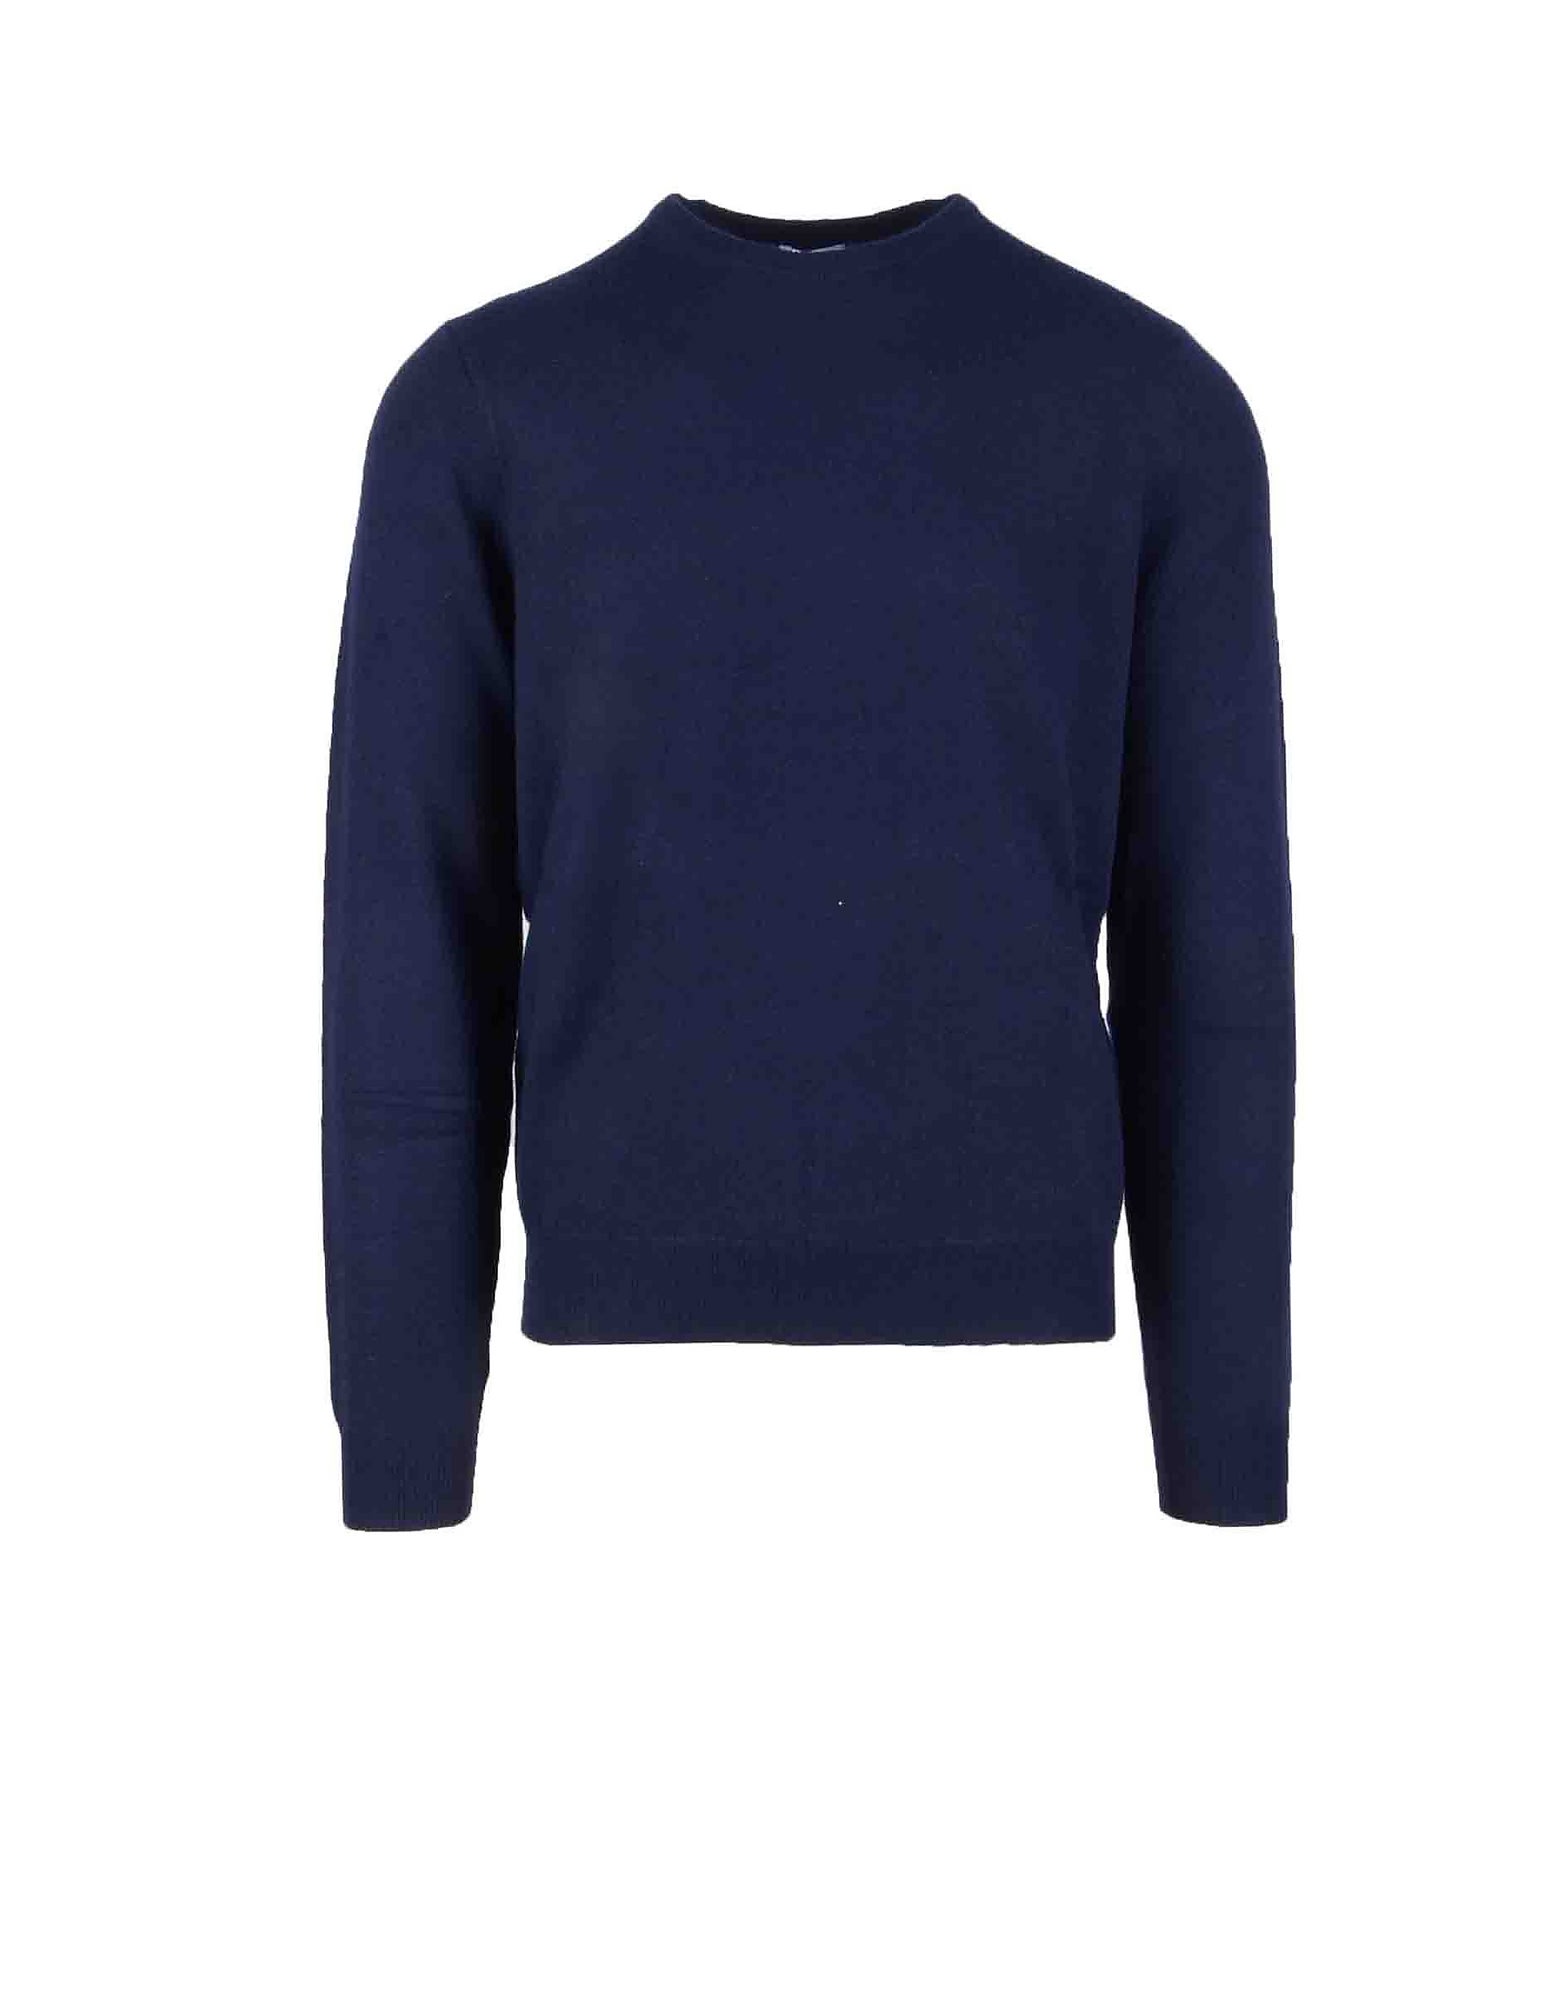 Mens Navy Blue Sweater